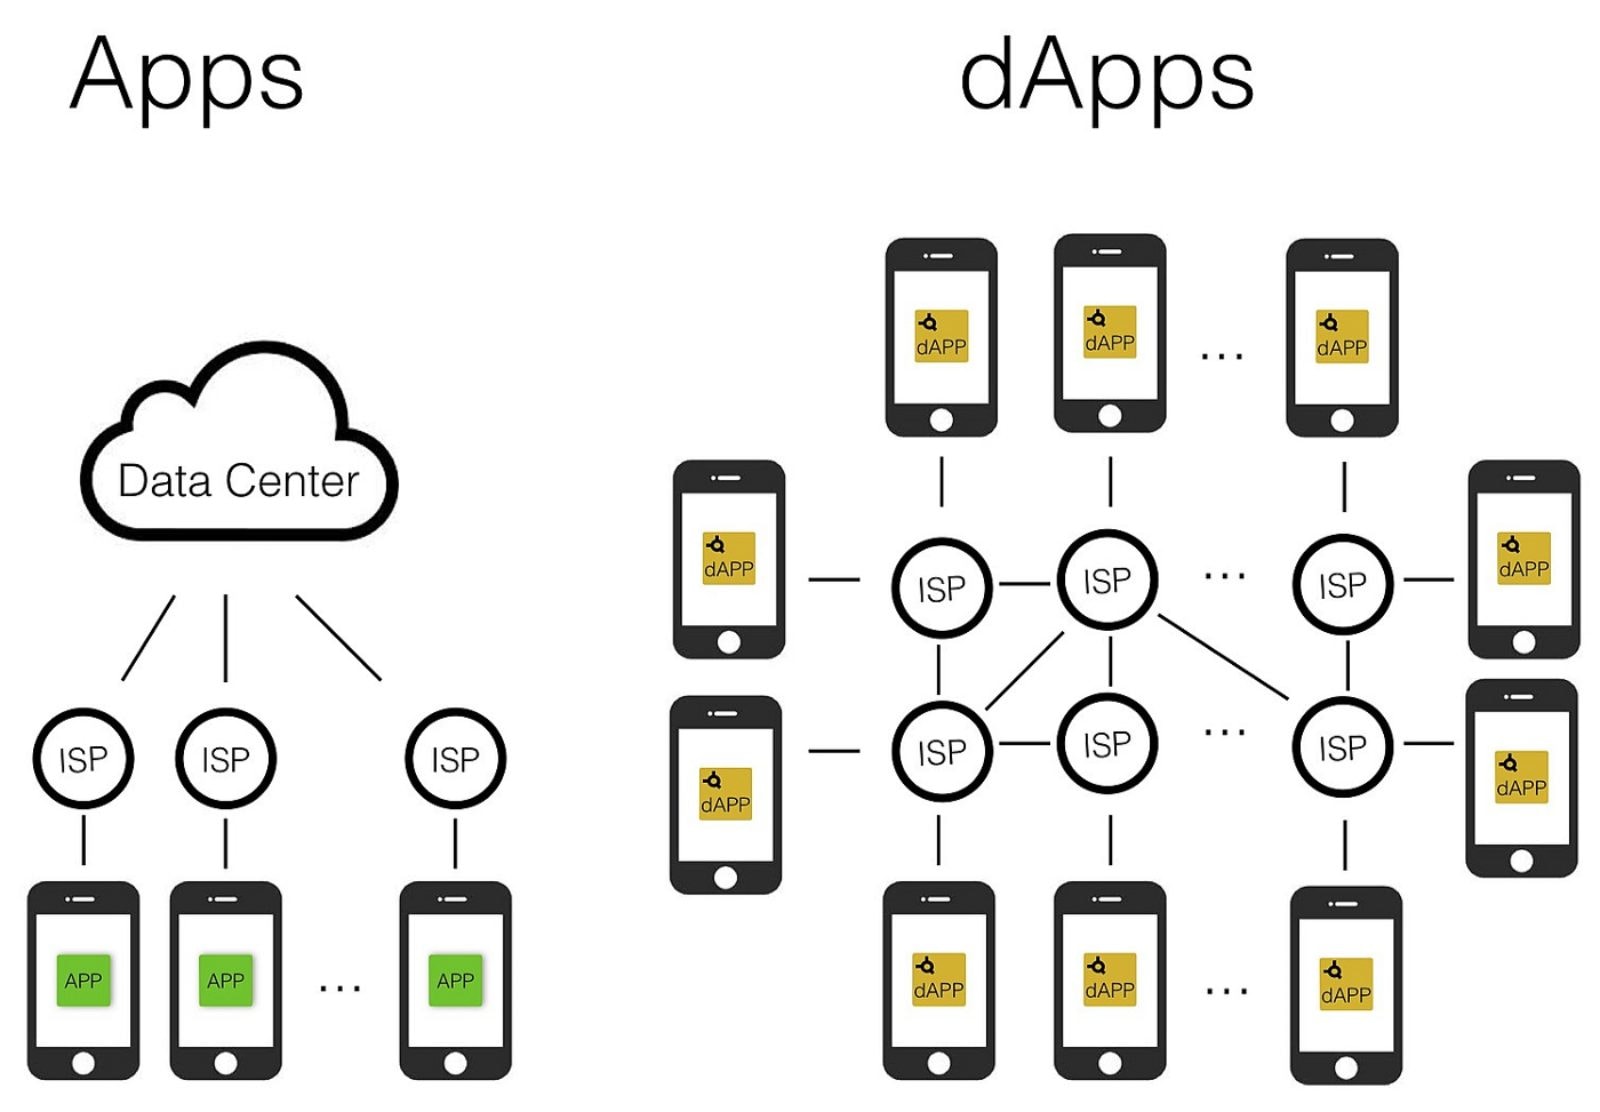 App vs dApp